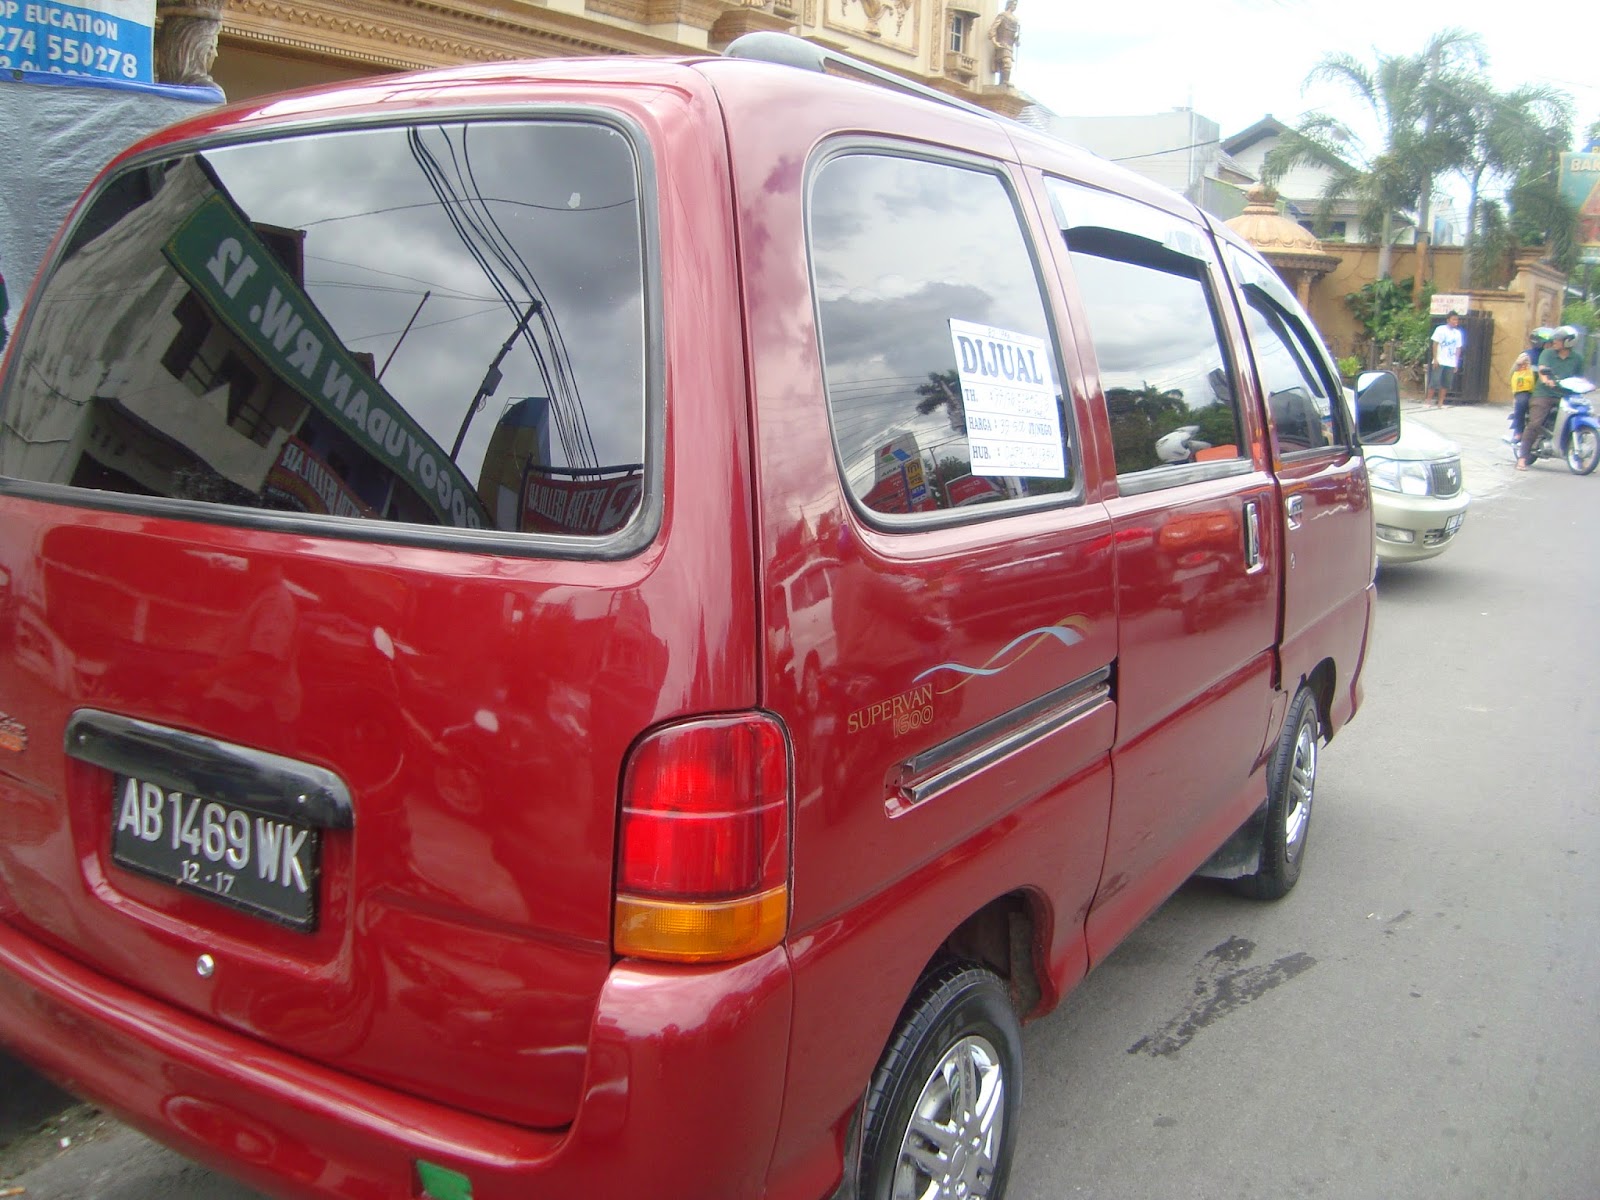 Jual Daihatsu Espass 1997 Mobil Bekas Murah Di Yogyakarta